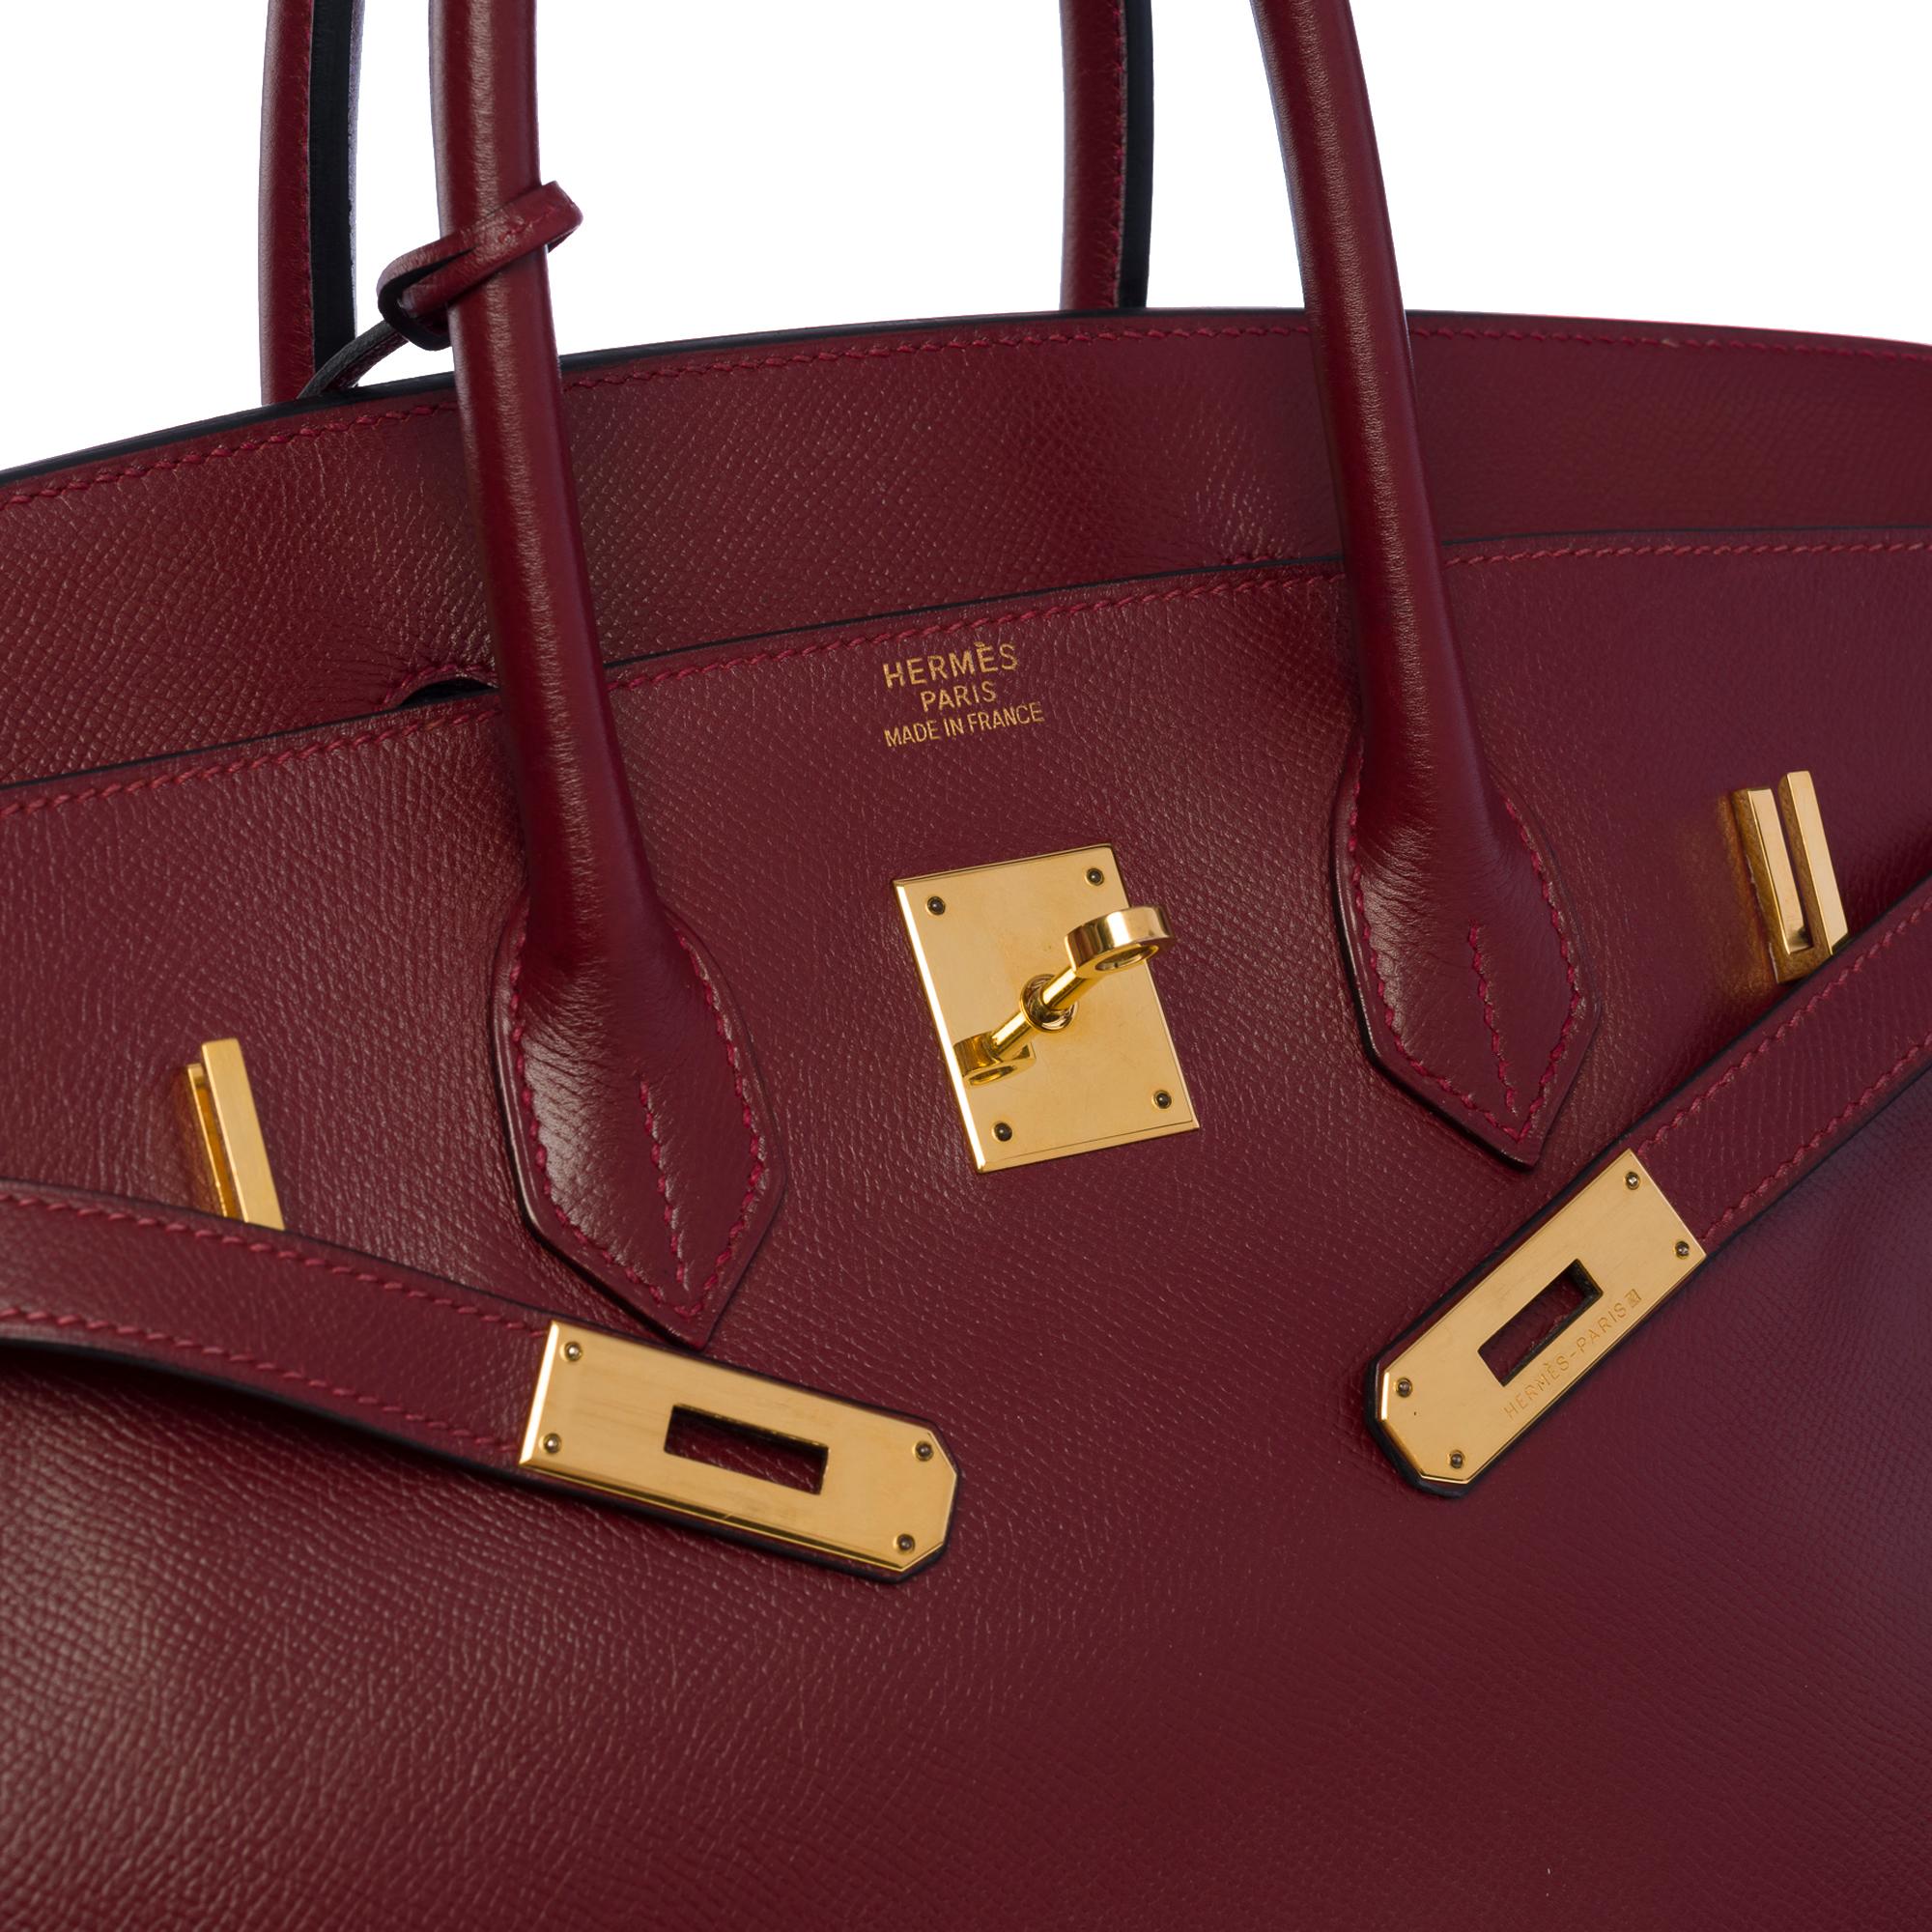 Stunning Hermès Birkin 35 handbag in Rouge H (Burgundy) epsom leather, GHW 1